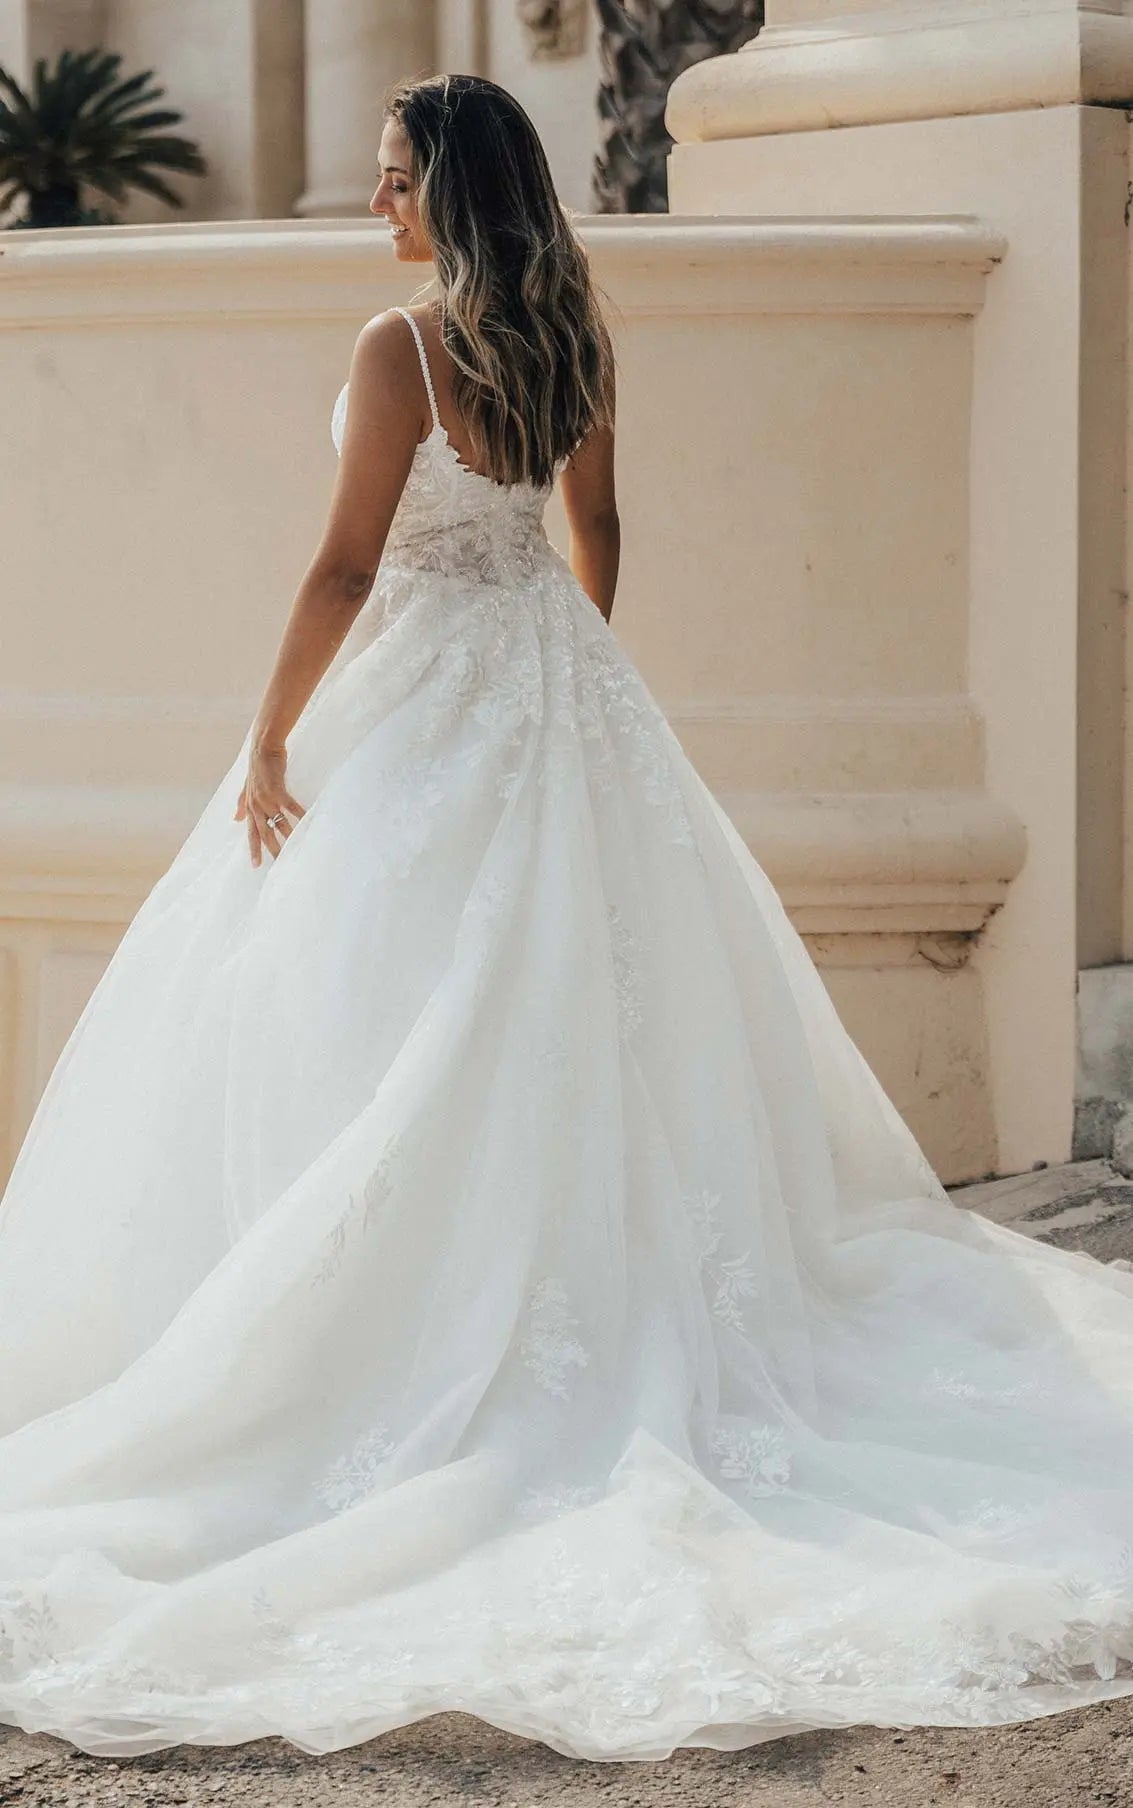 Modern Ballgown Wedding Dress With Square Neckline D3386 Essense of Australia | Philly Bridal